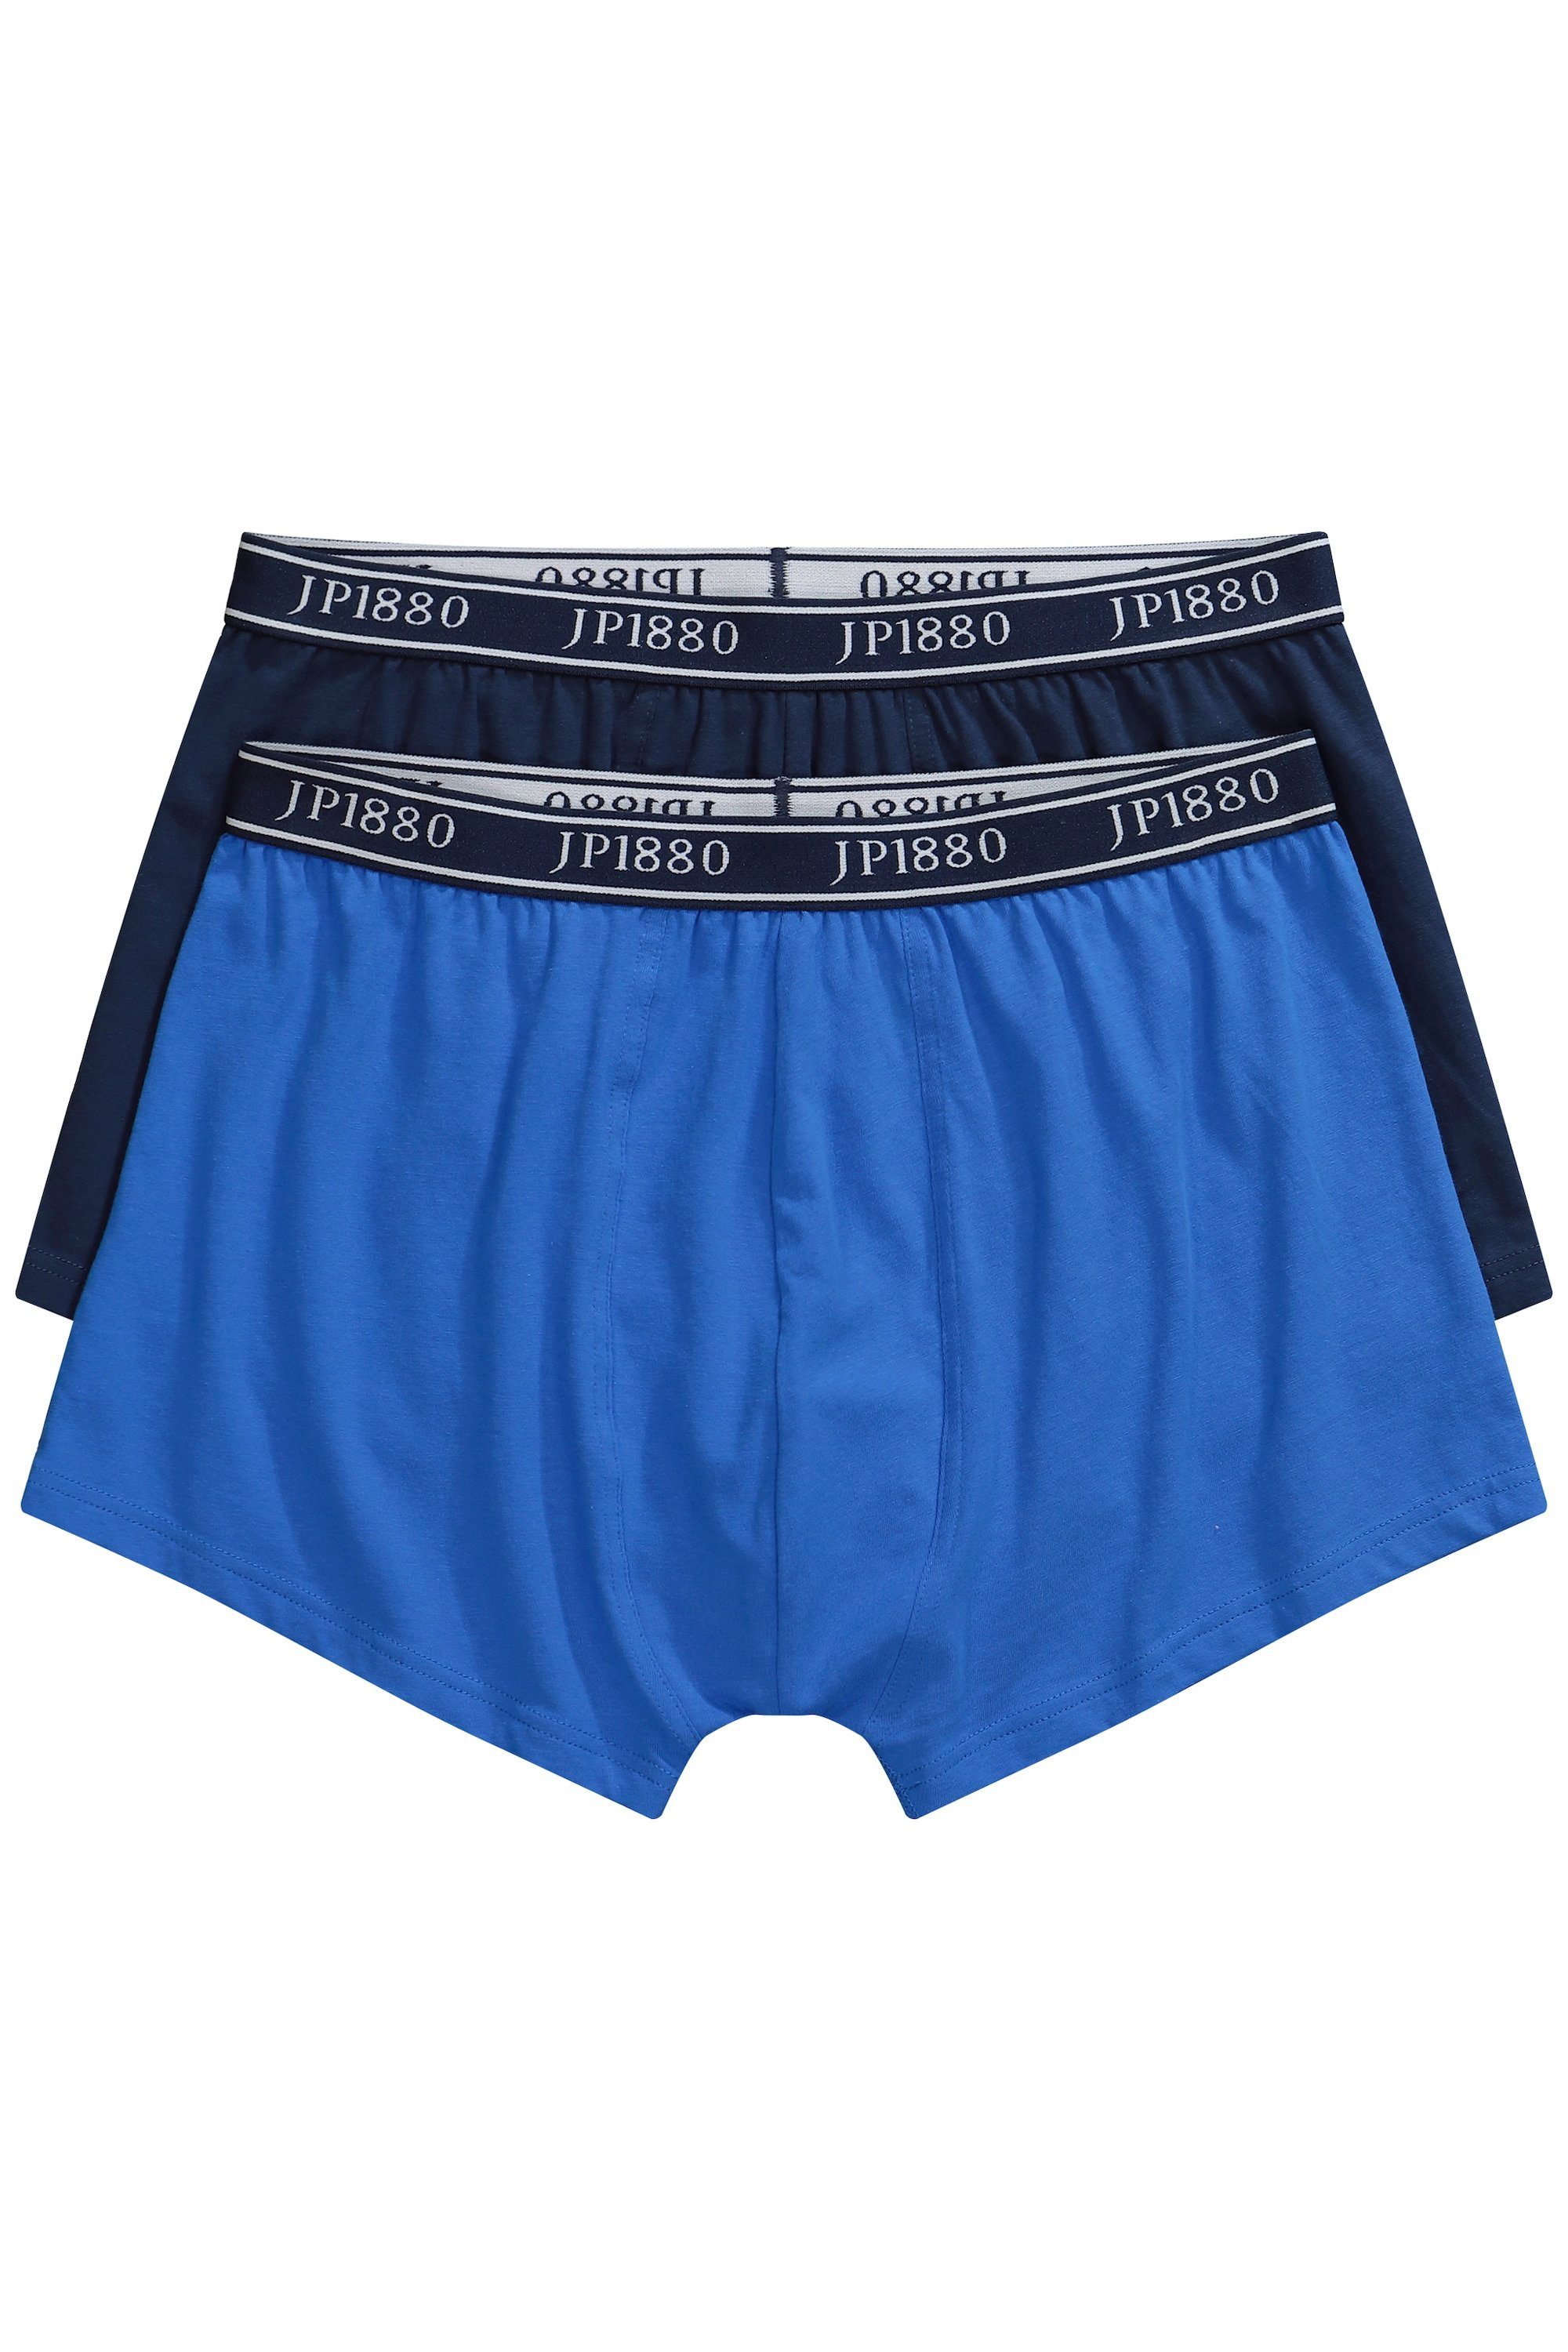 Unterhose Boxershorts lapisblau 2er-Pack FLEXNAMIC® JP1880 Hip-Pants